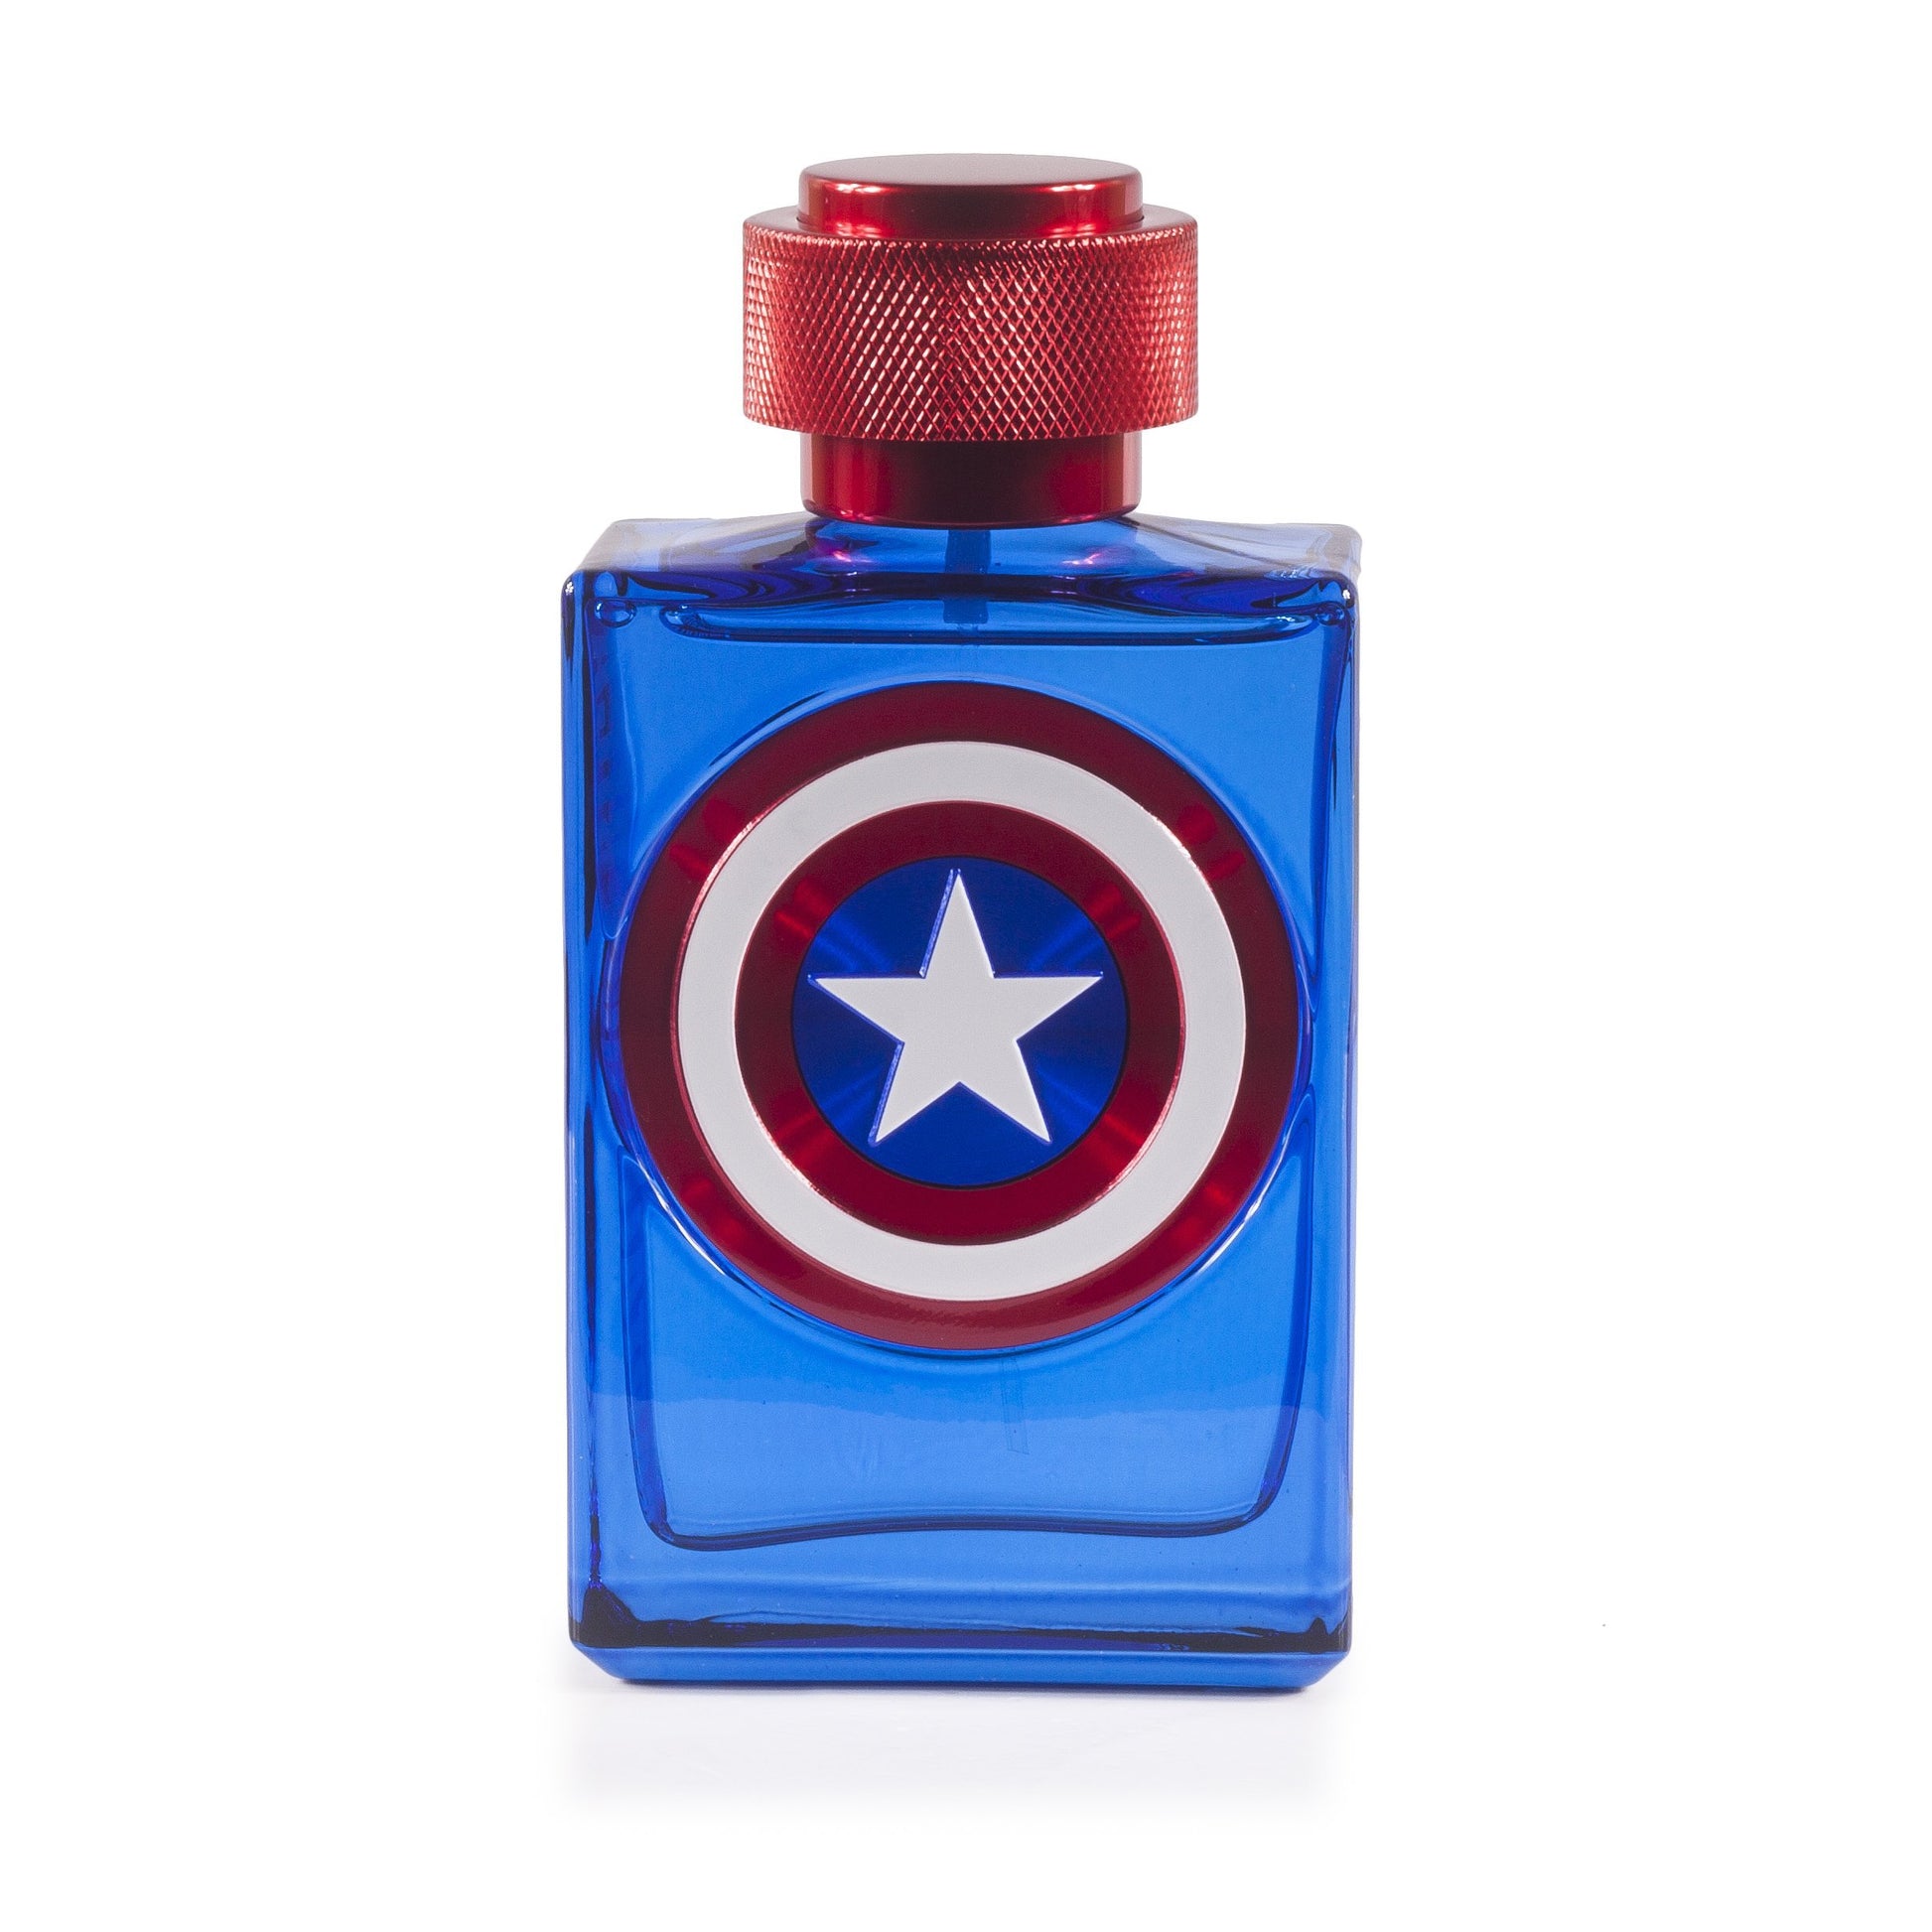 Captain America Eau de Toilette Spray for Boys by Marvel, Product image 2